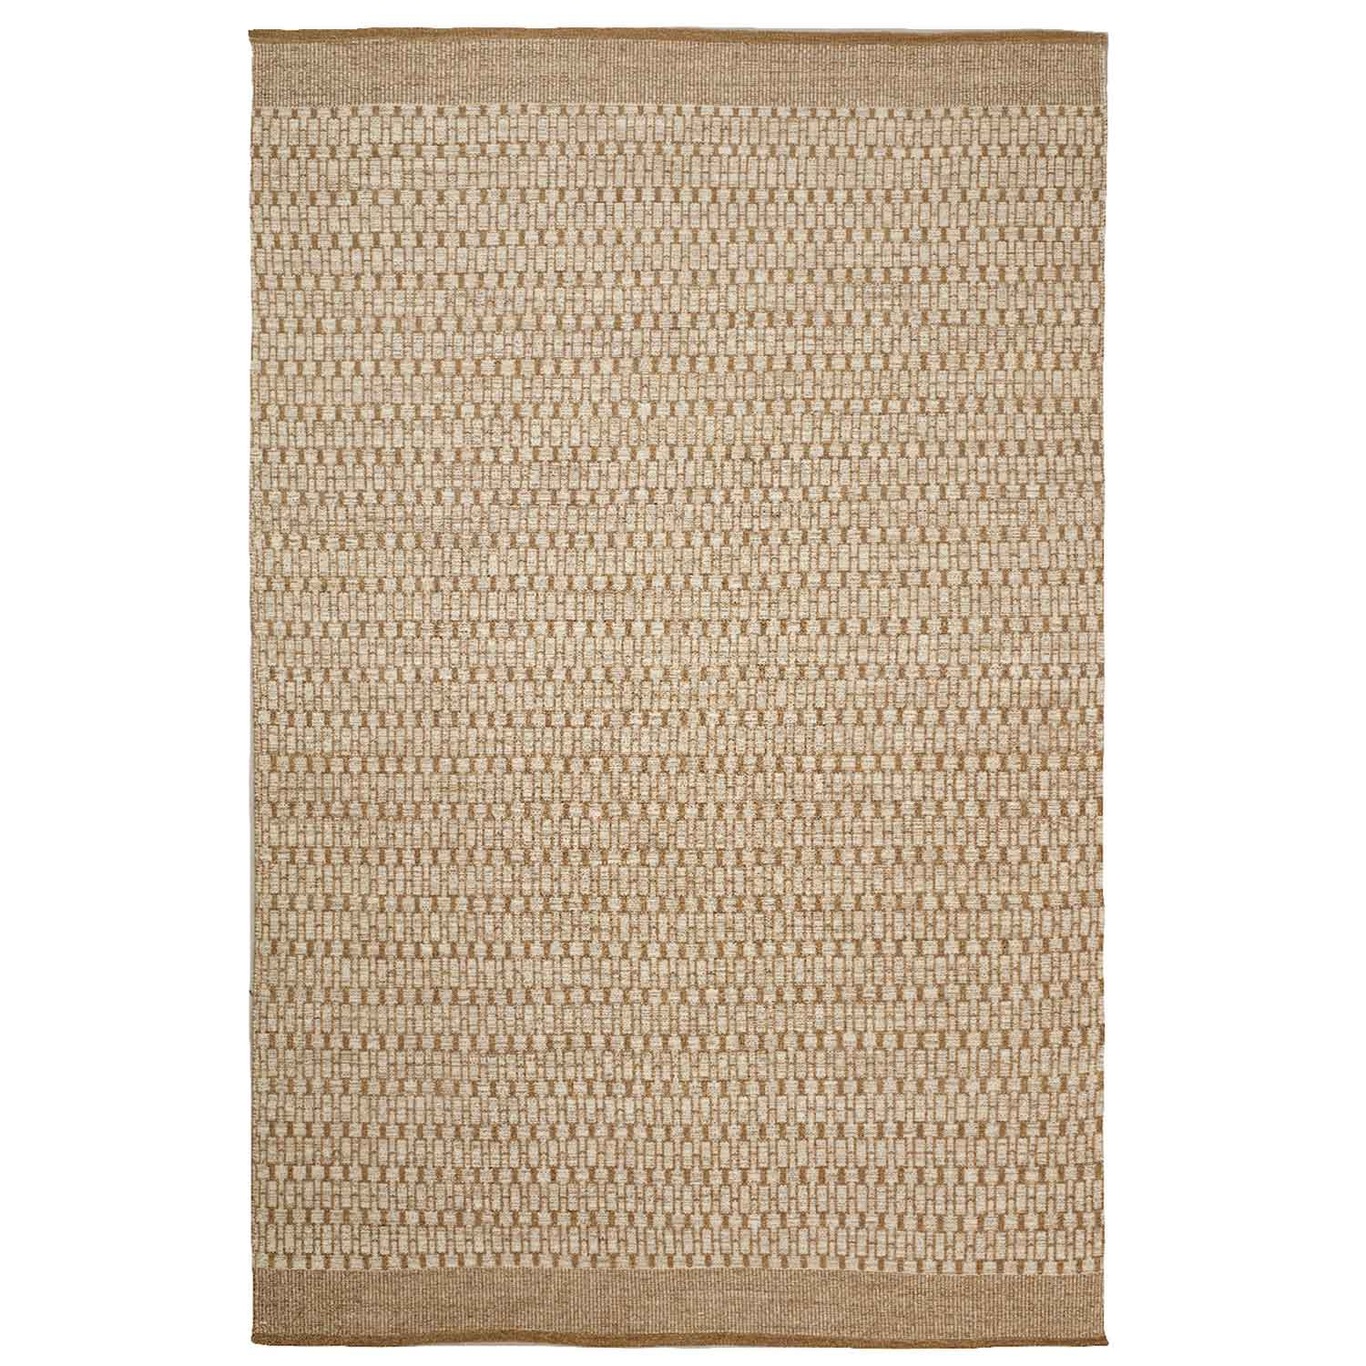 Mahi Dhurry Teppich 170x240 cm, Beige/ Off-White